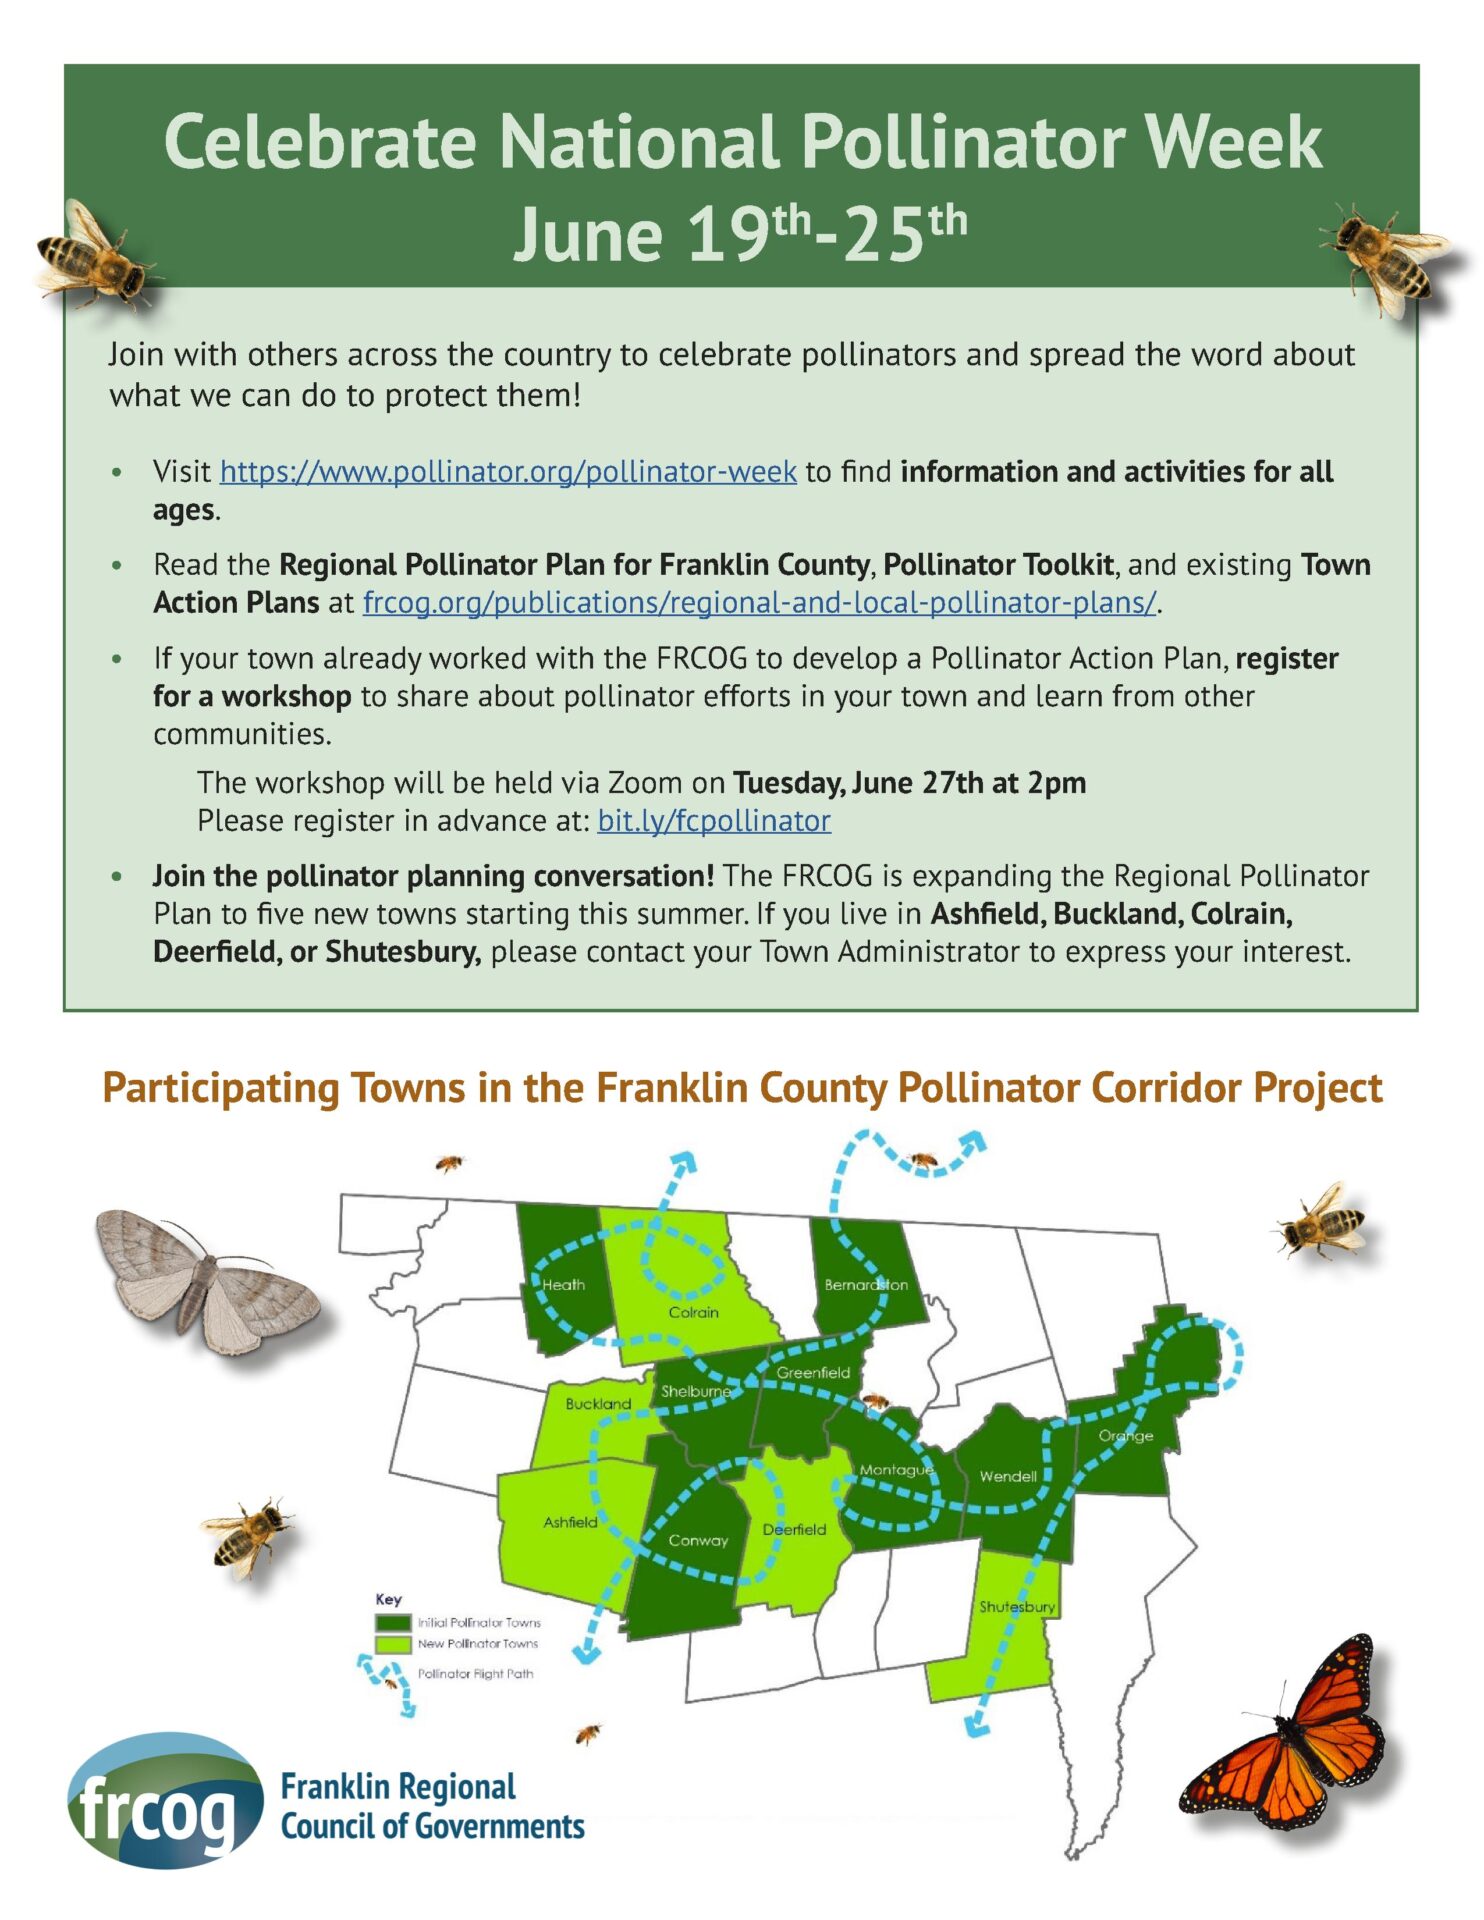 Celebrate National Pollinator Week, June 19th 25th! FRCOG